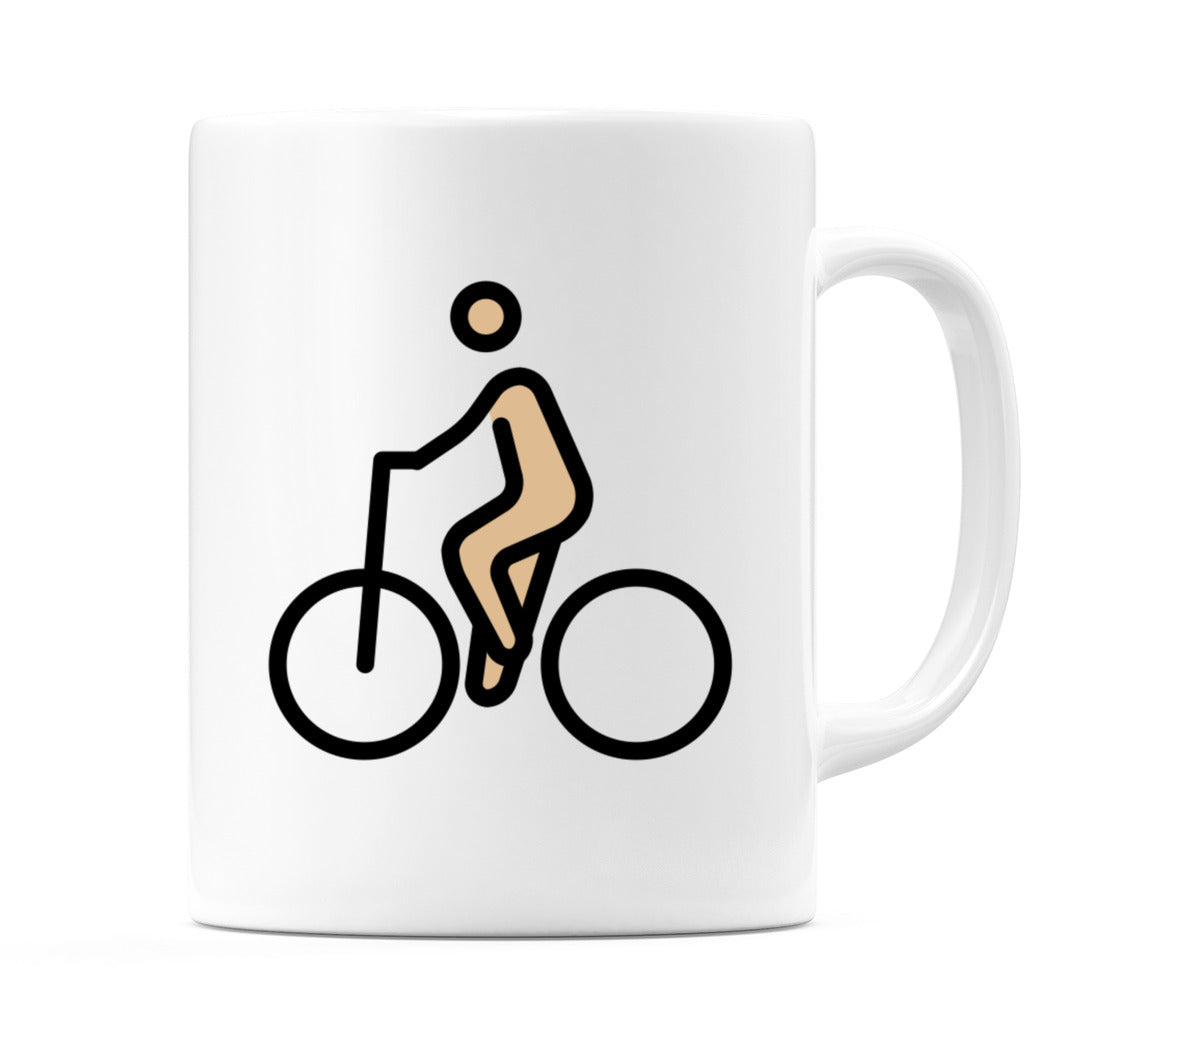 Male Biking: Medium-Light Skin Tone Emoji Mug